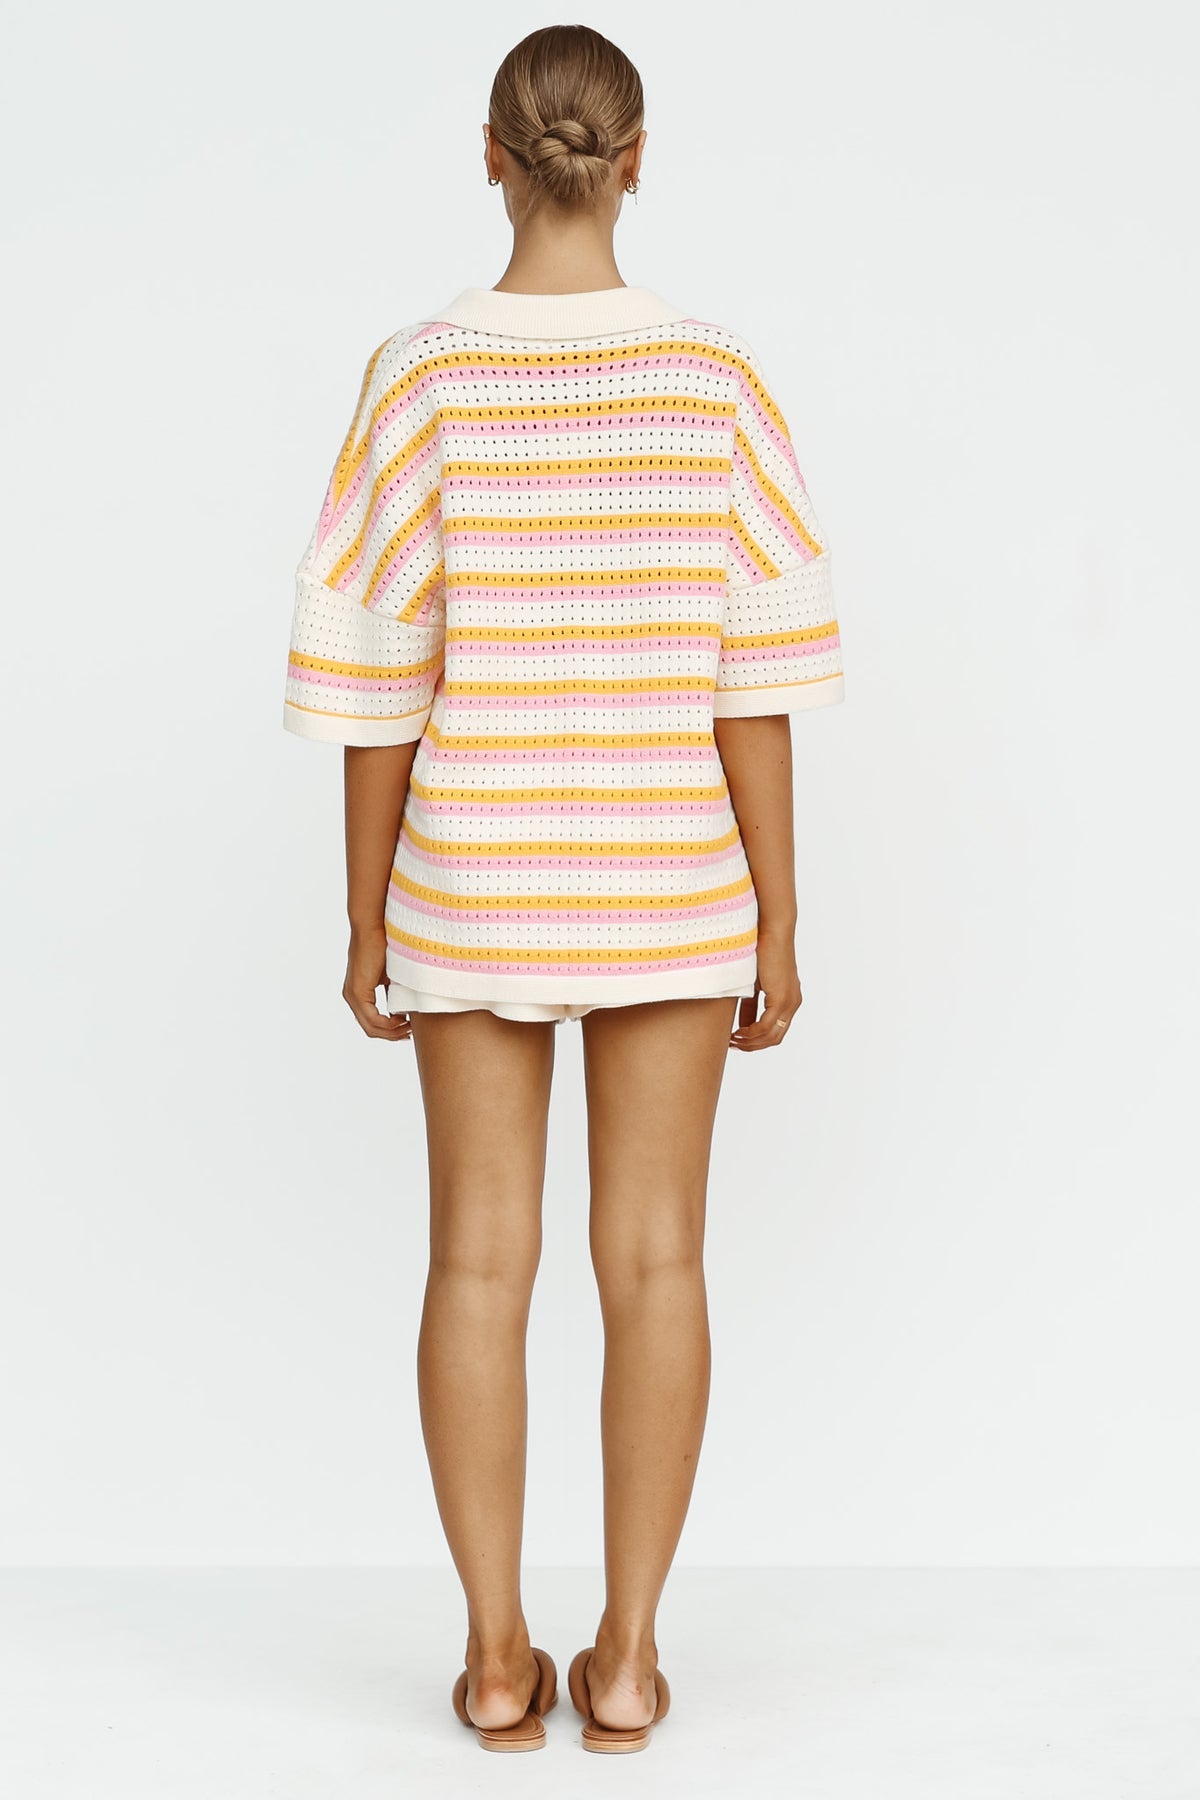 NTG Fad Contrast striped loose knit cardigan shorts set